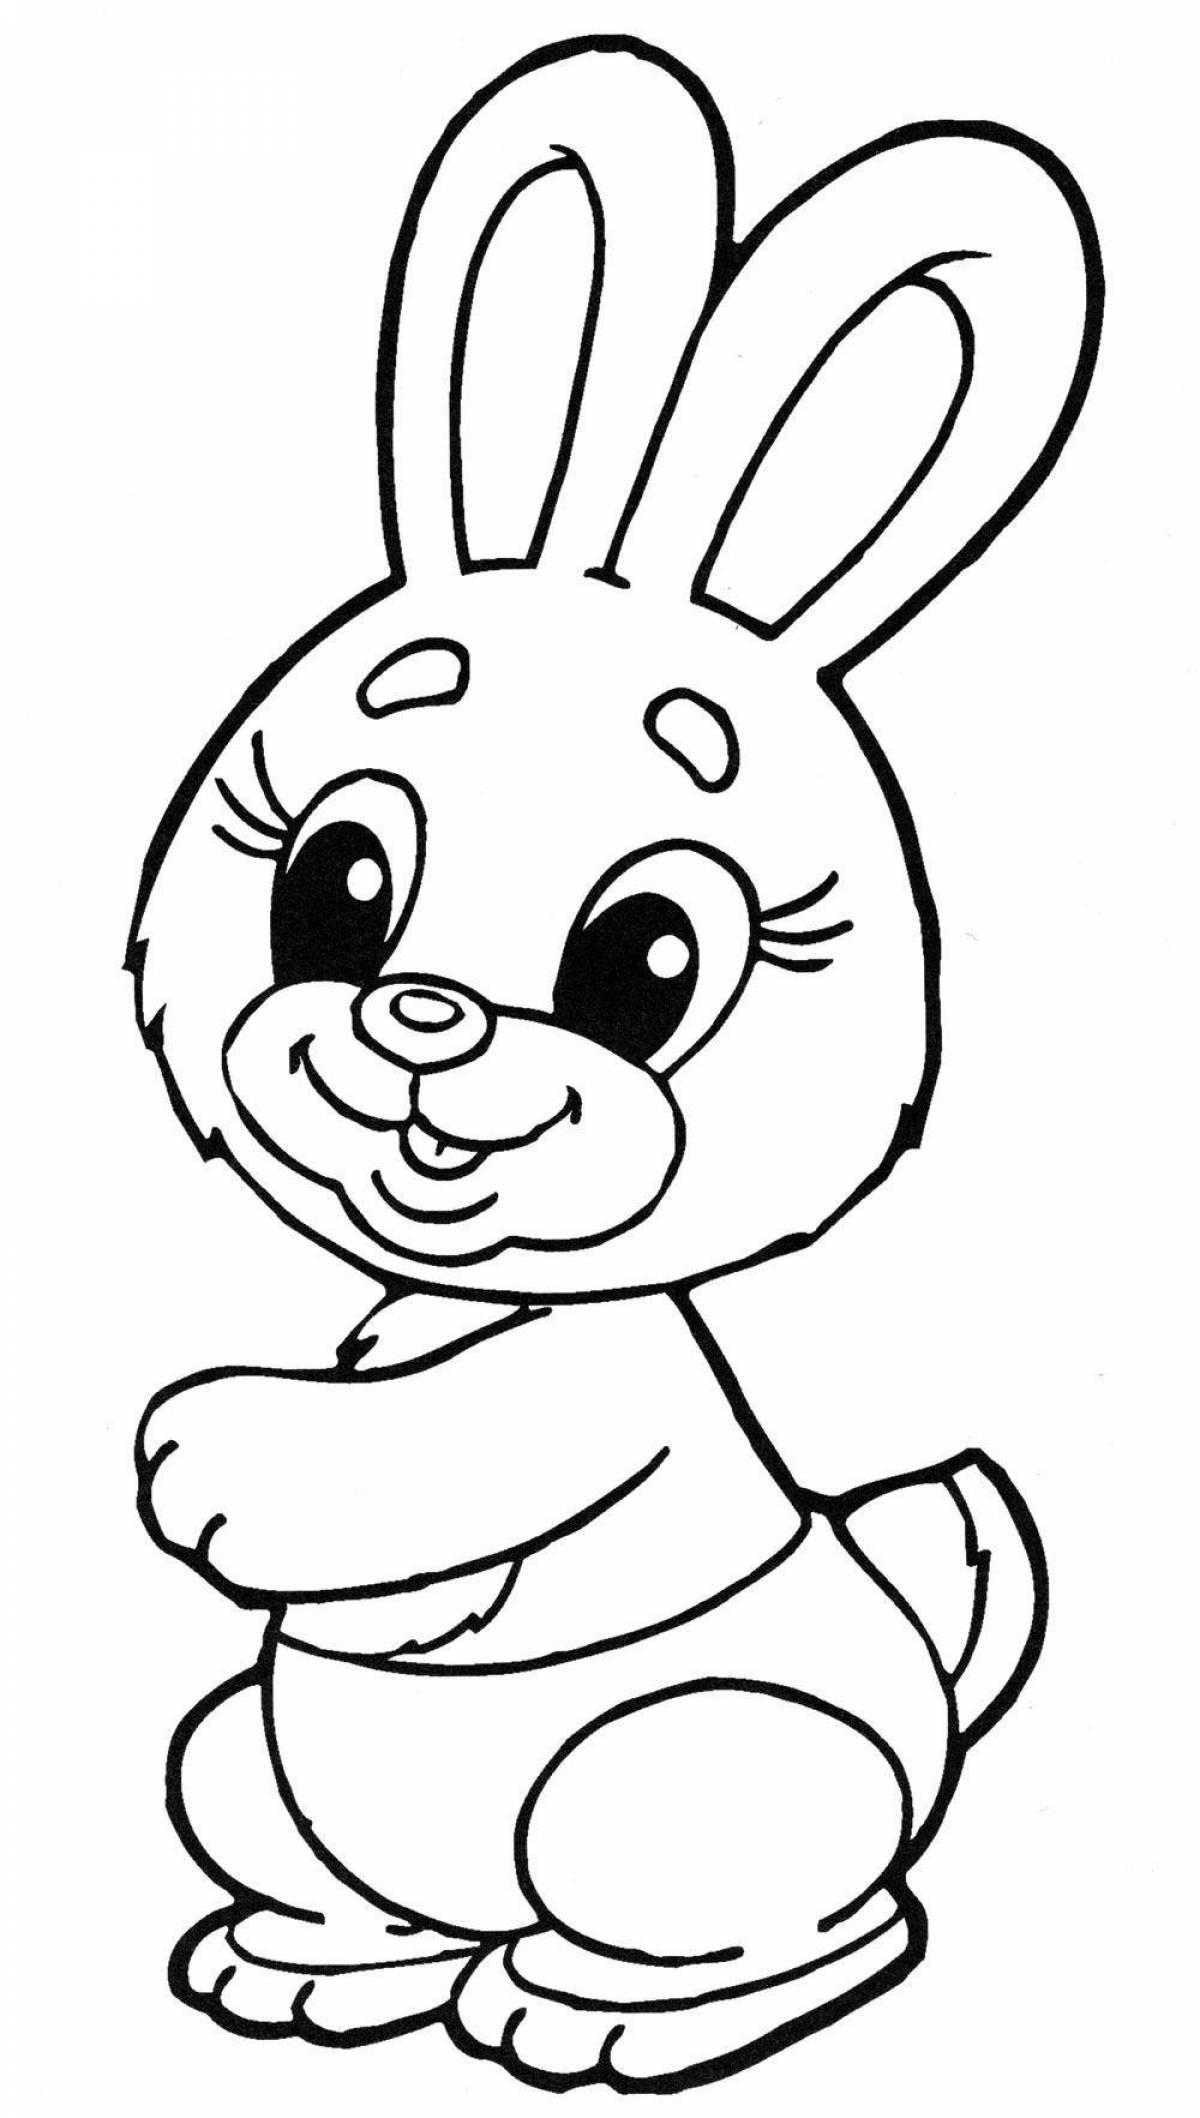 Coloring book joyful rabbit